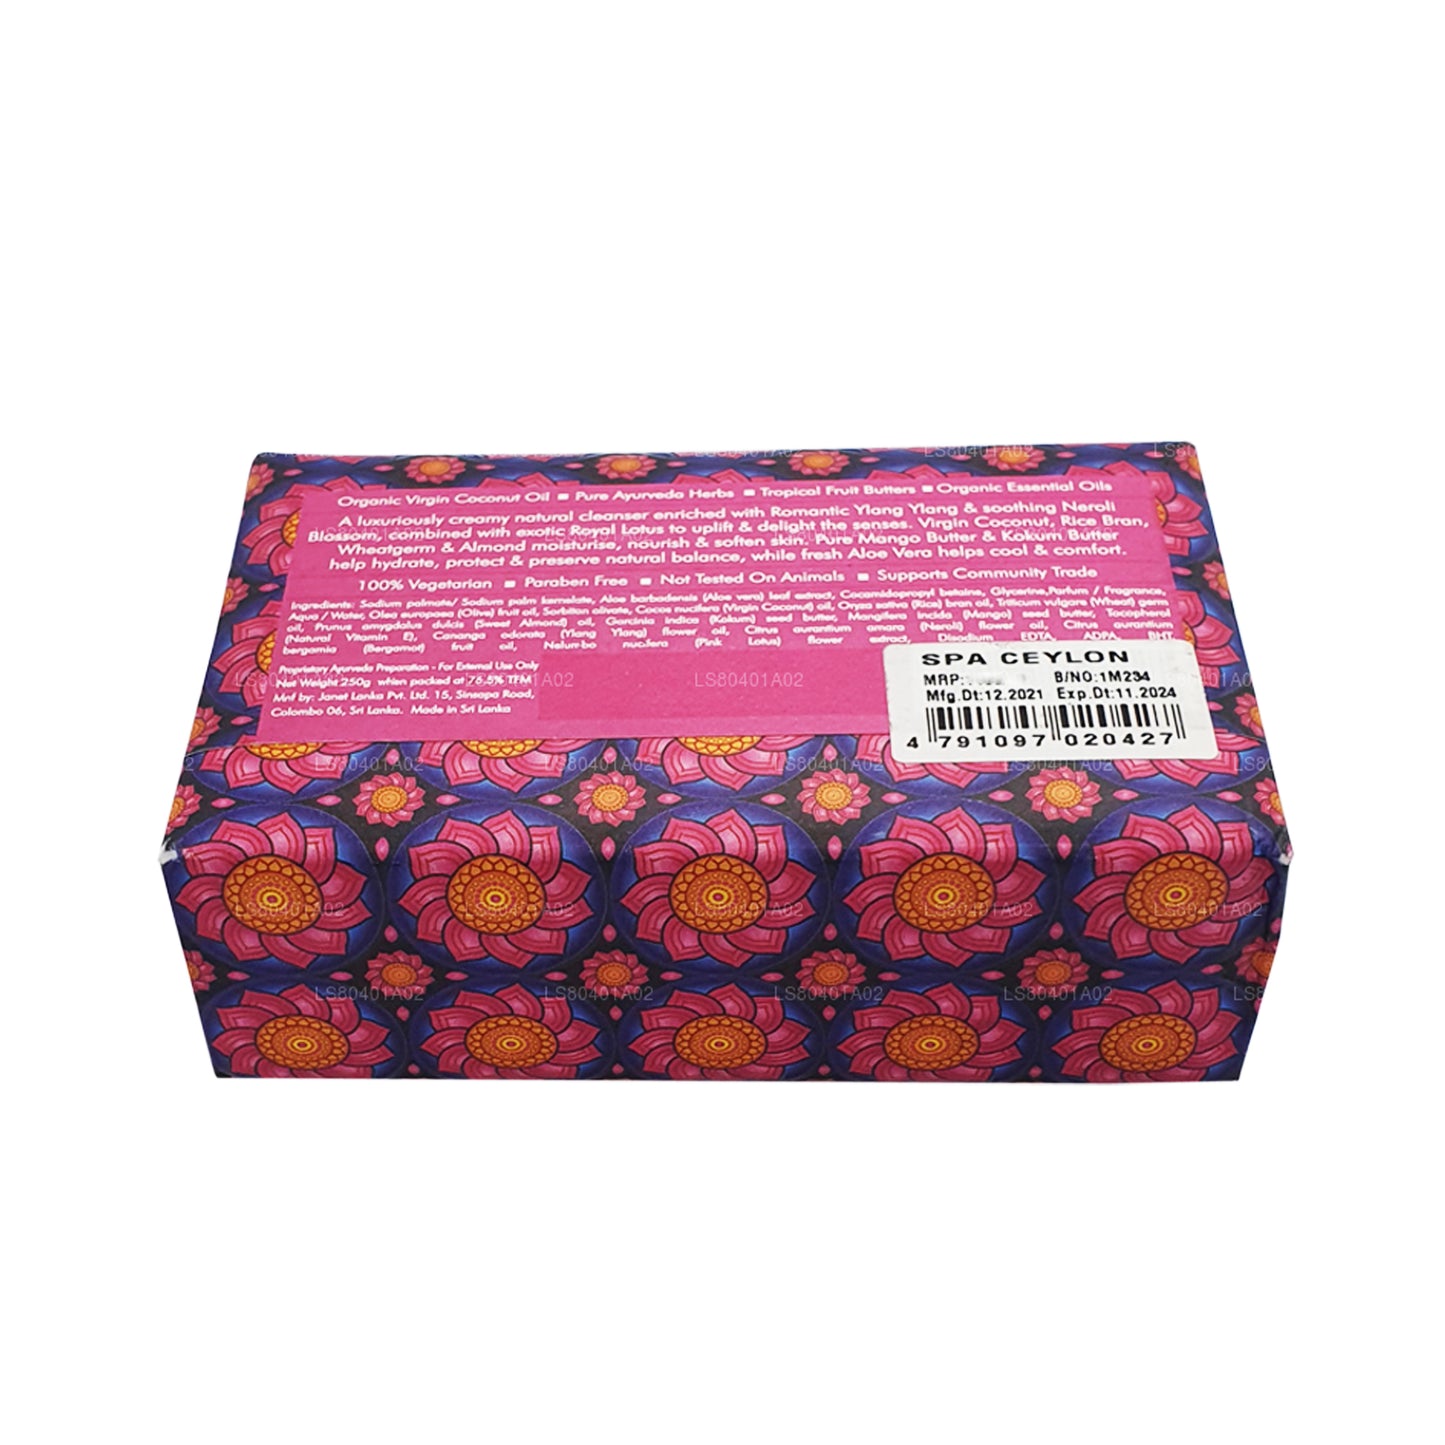 Spa Ceylon Pink Lotus Almond Luxury Soap (250g)